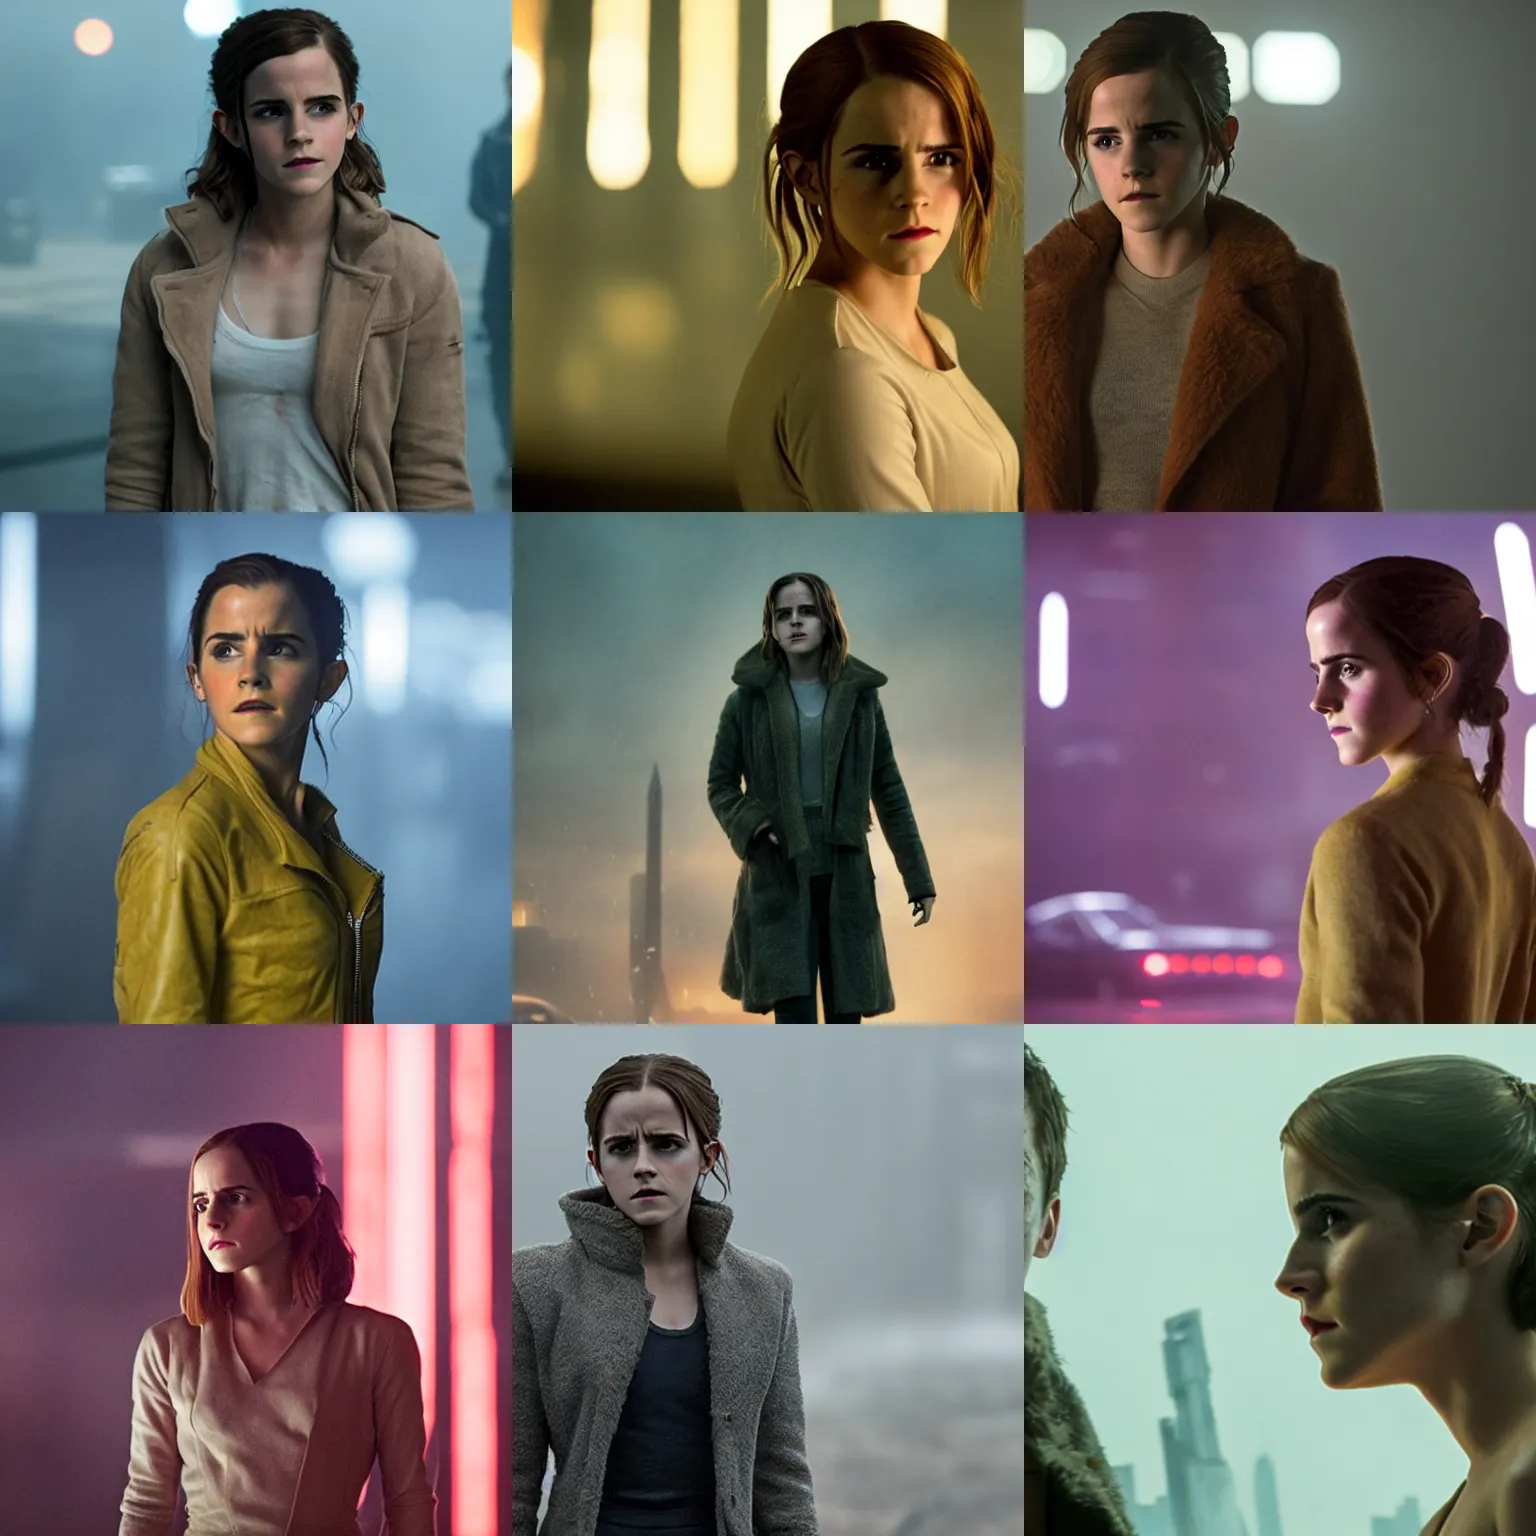 Prompt: Movie still of Emma Watson in Blade Runner 2049